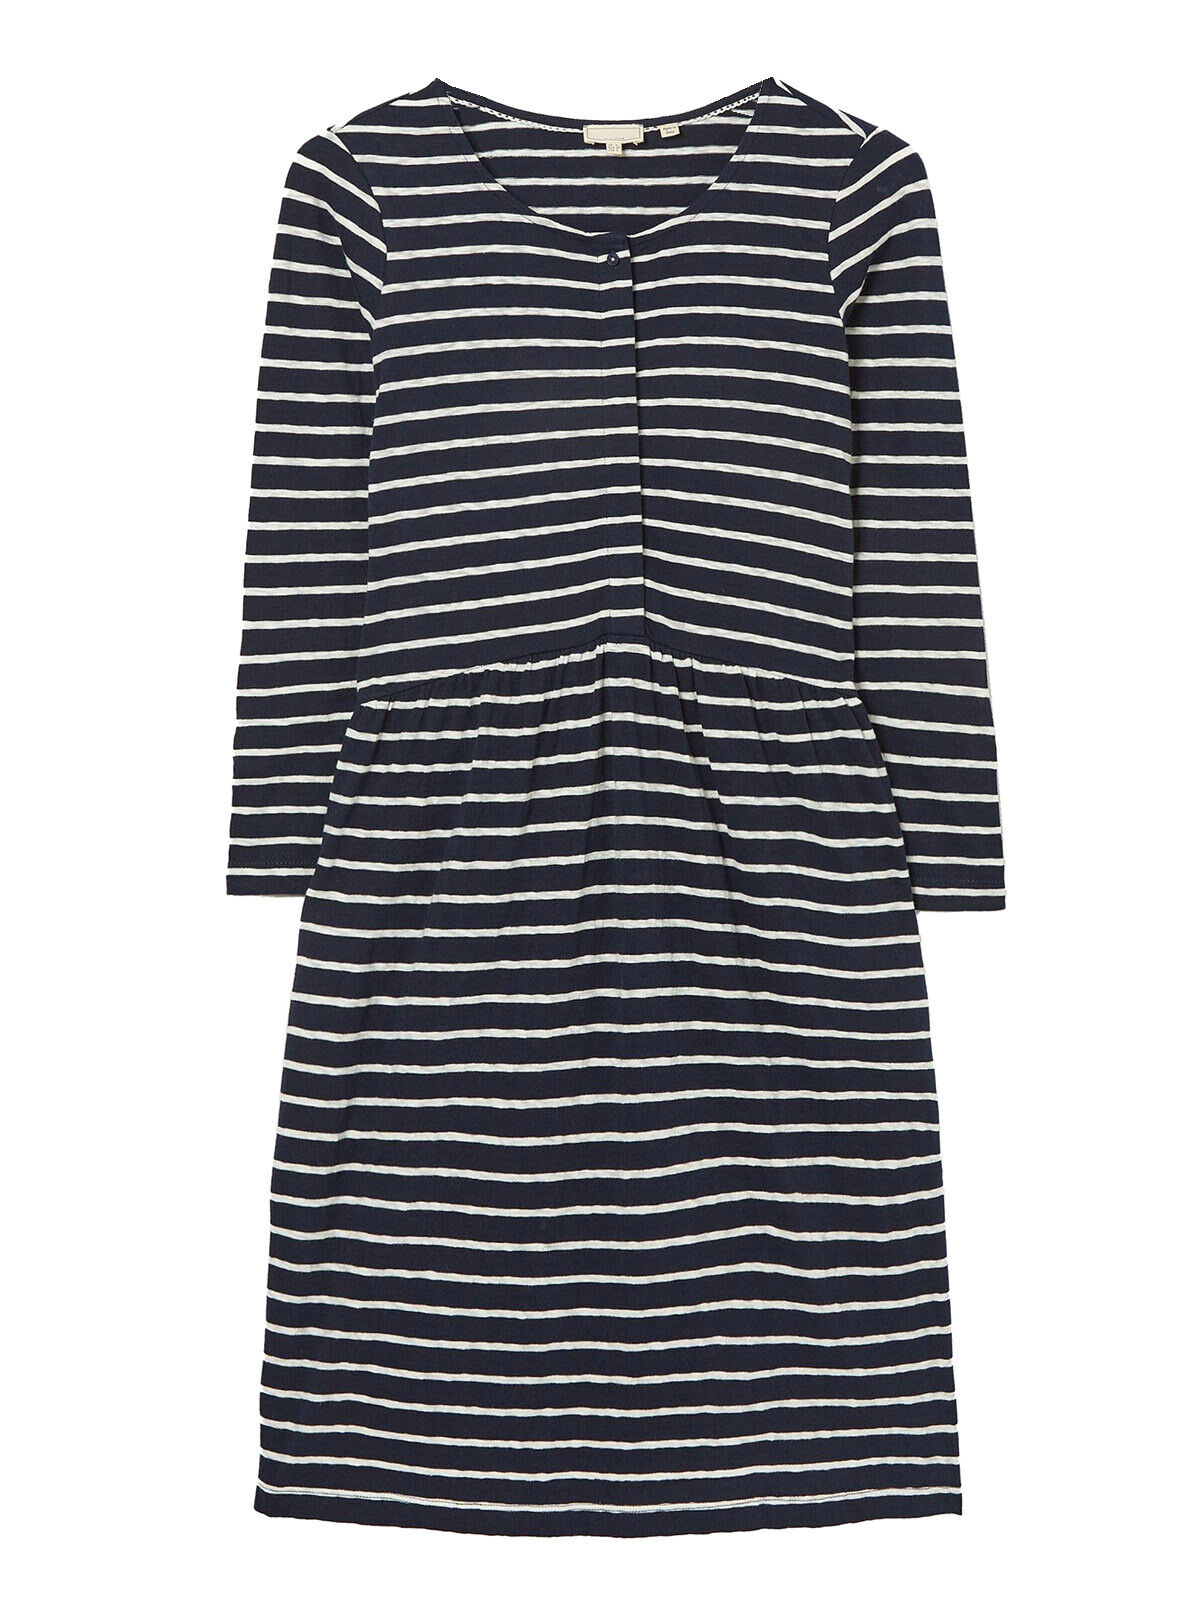 EX Fat Face Navy Nina Stripe Jersey Dress Sizes 12, 14, 24 RRP £46